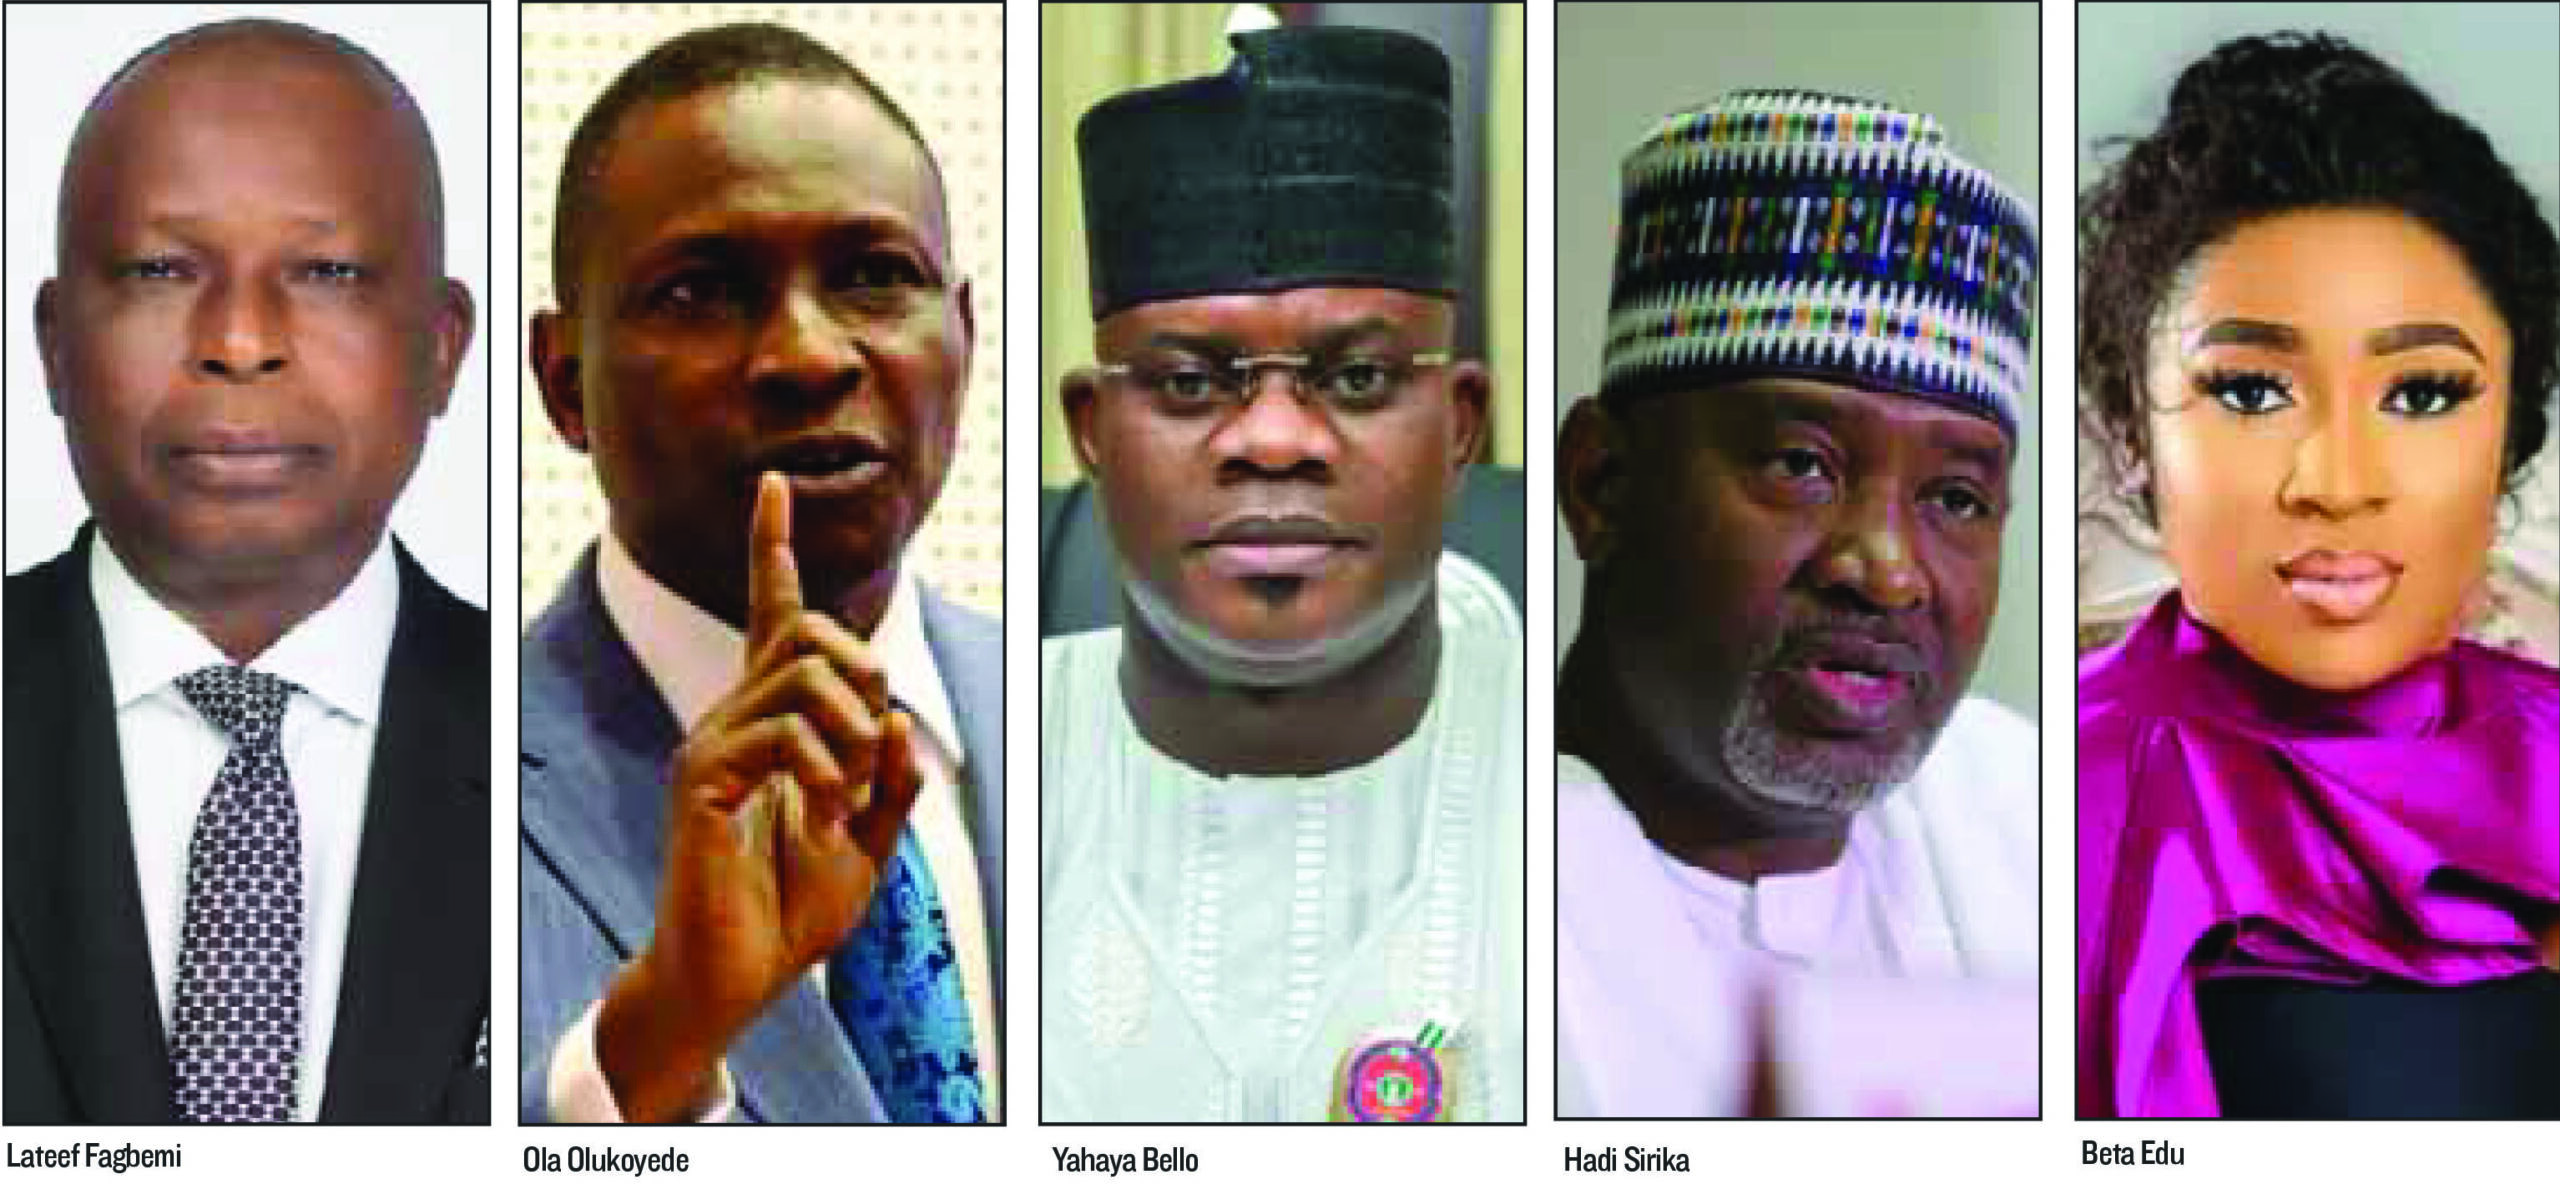 EFCC intensifies manhunt for Bello, detains Sirika, freezes 300 accounts | The Guardian Nigeria News